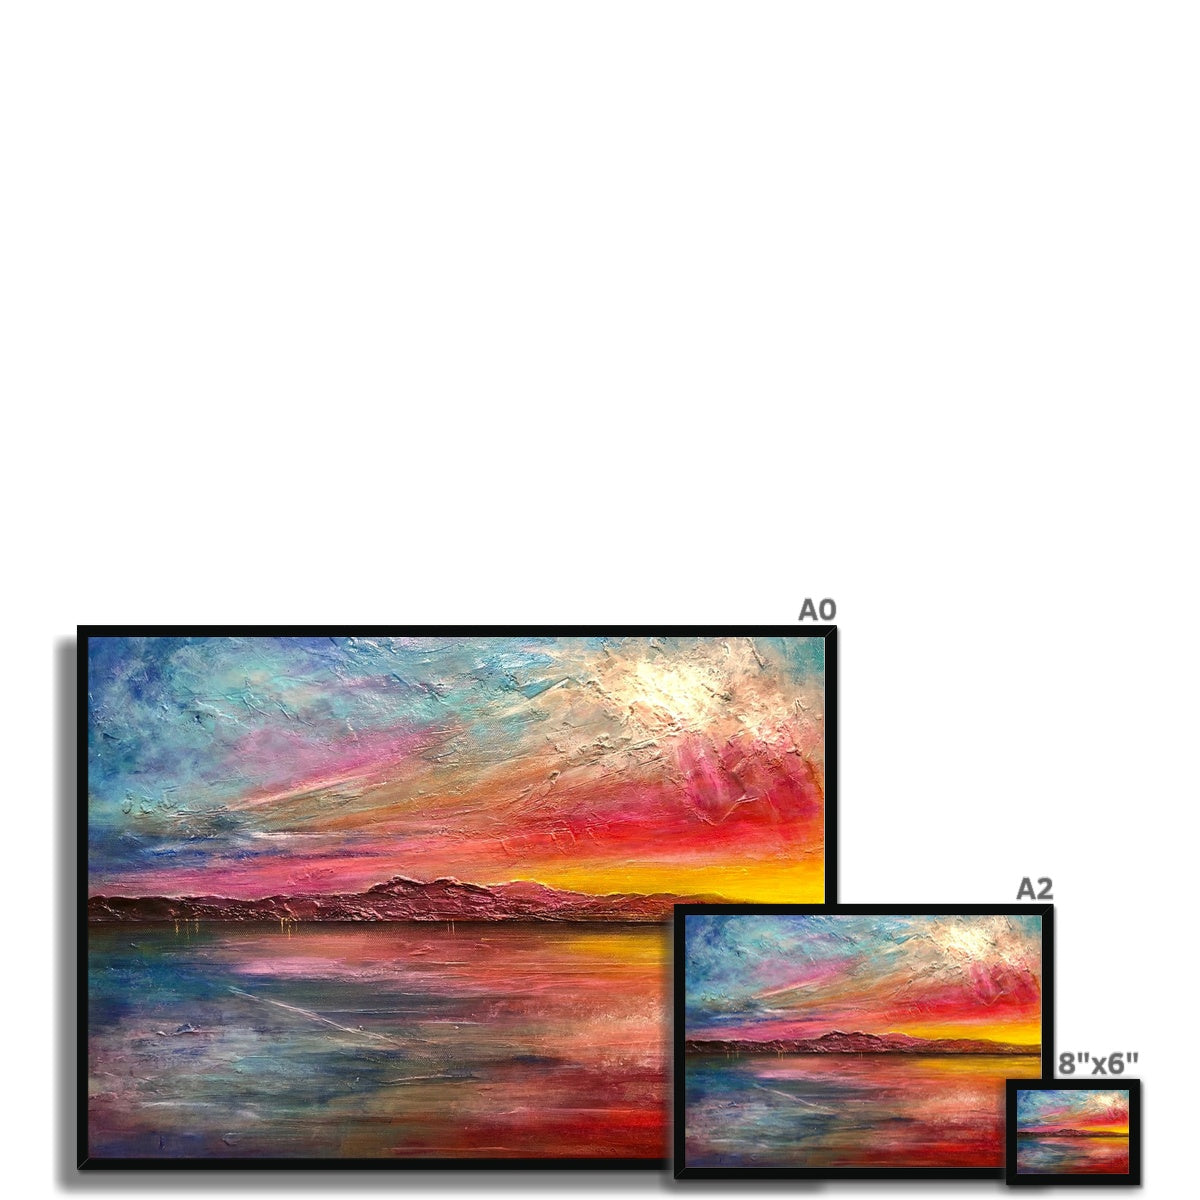 Arran Sunset ii Painting | Framed Prints From Scotland-Framed Prints-Arran Art Gallery-Paintings, Prints, Homeware, Art Gifts From Scotland By Scottish Artist Kevin Hunter